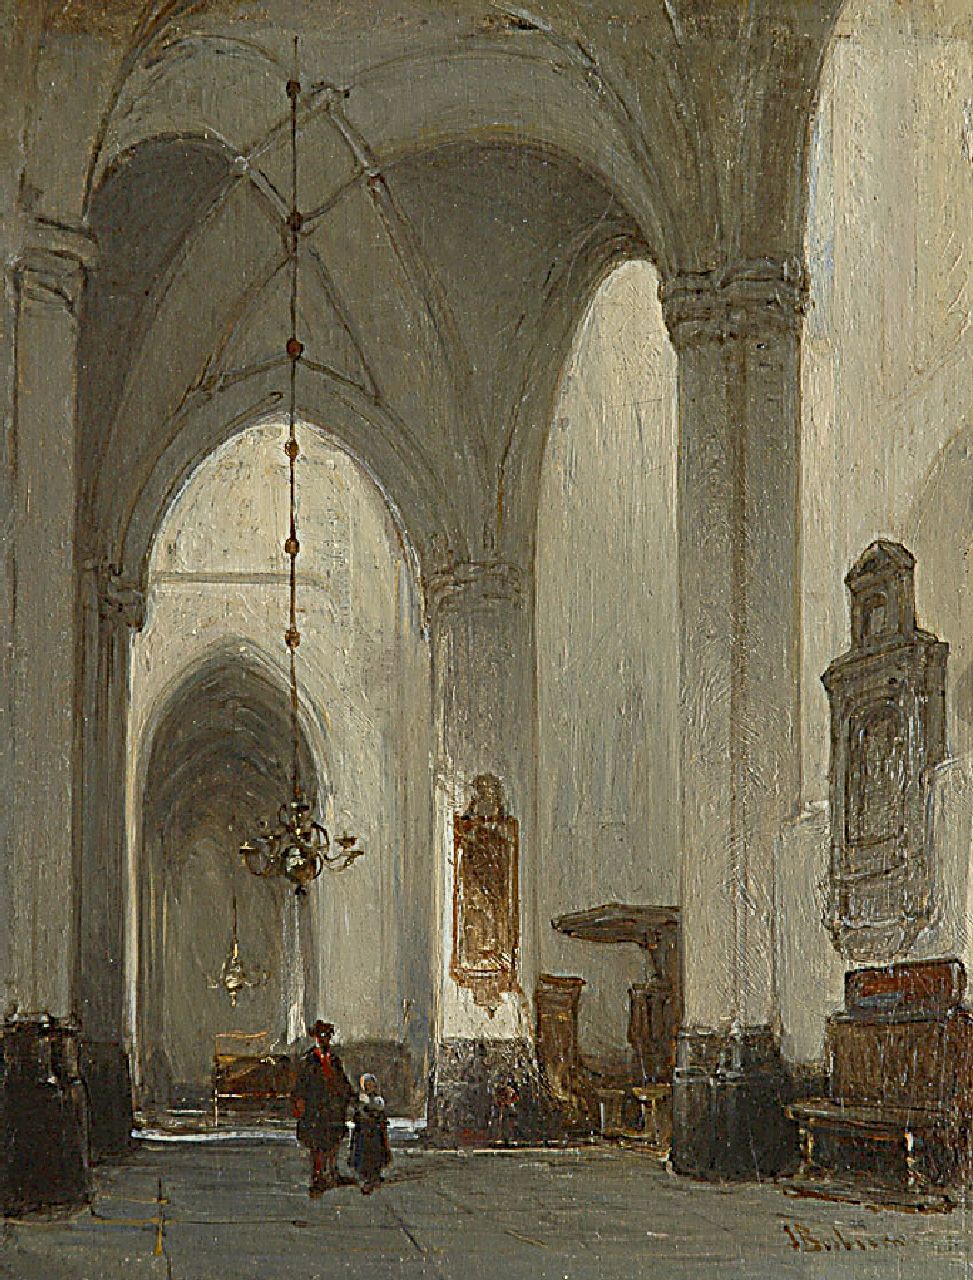 Bosboom J.  | Johannes Bosboom, The interior of the Grote Kerk in Breda, oil on panel 20.8 x 16.0 cm, signed l.r.